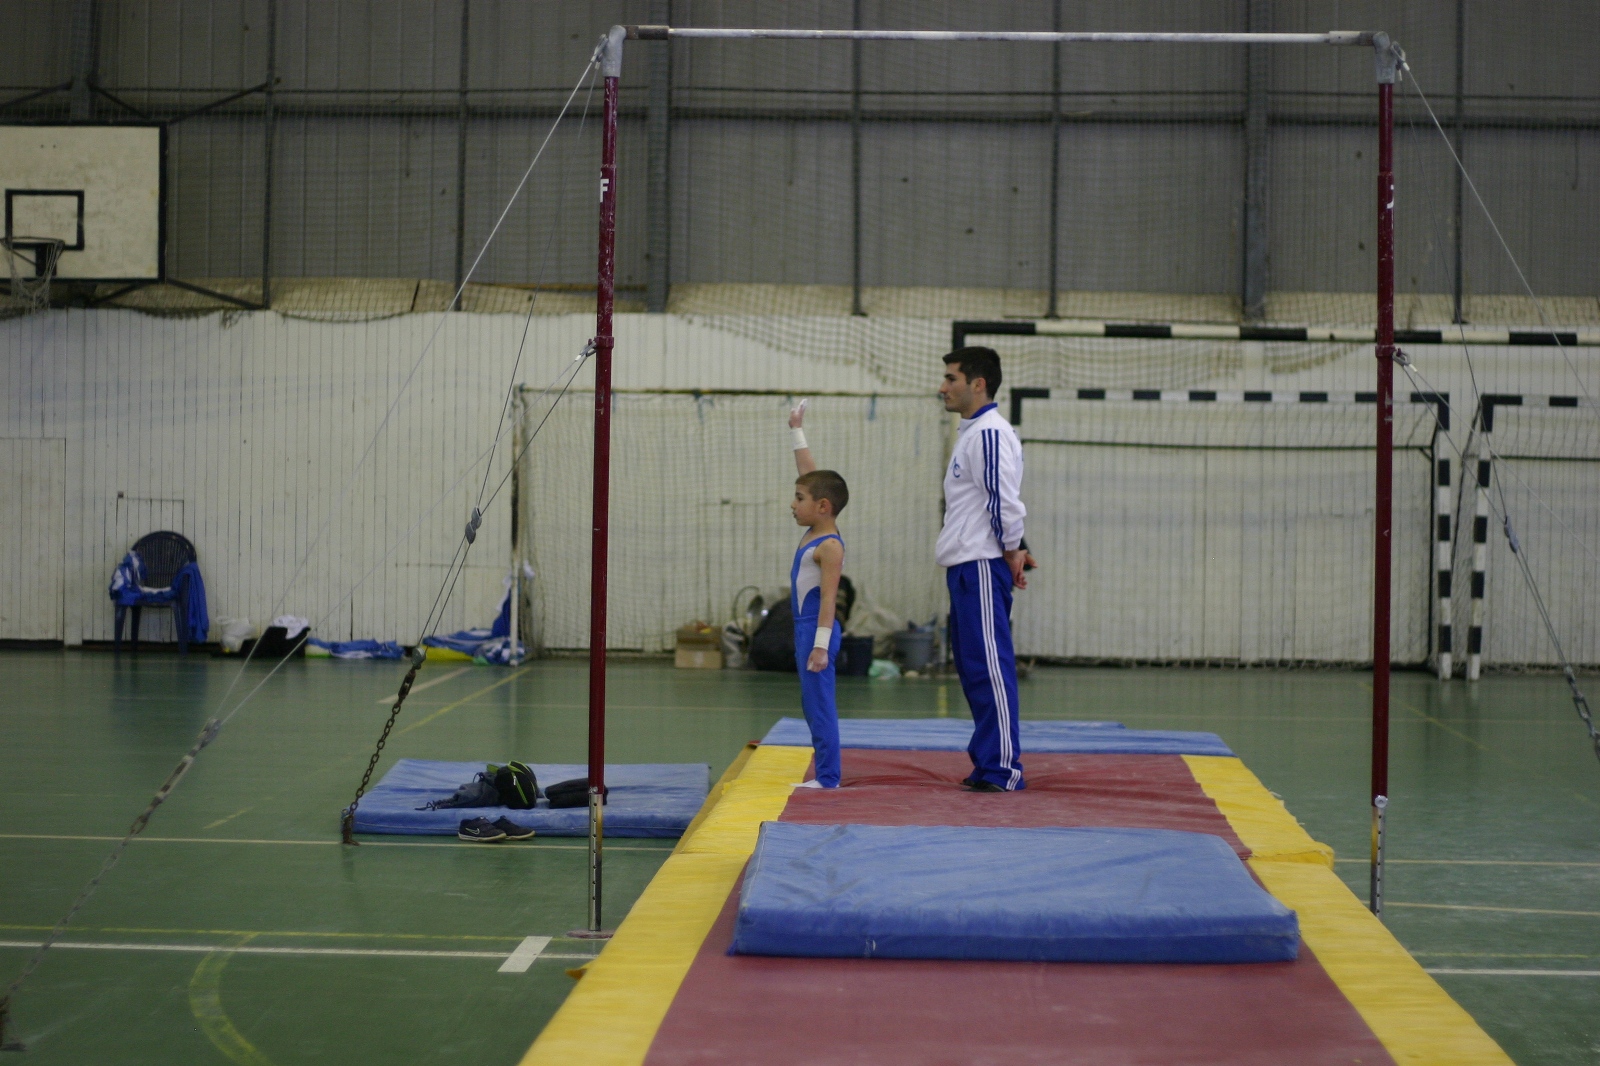 Gymnastics skills for children